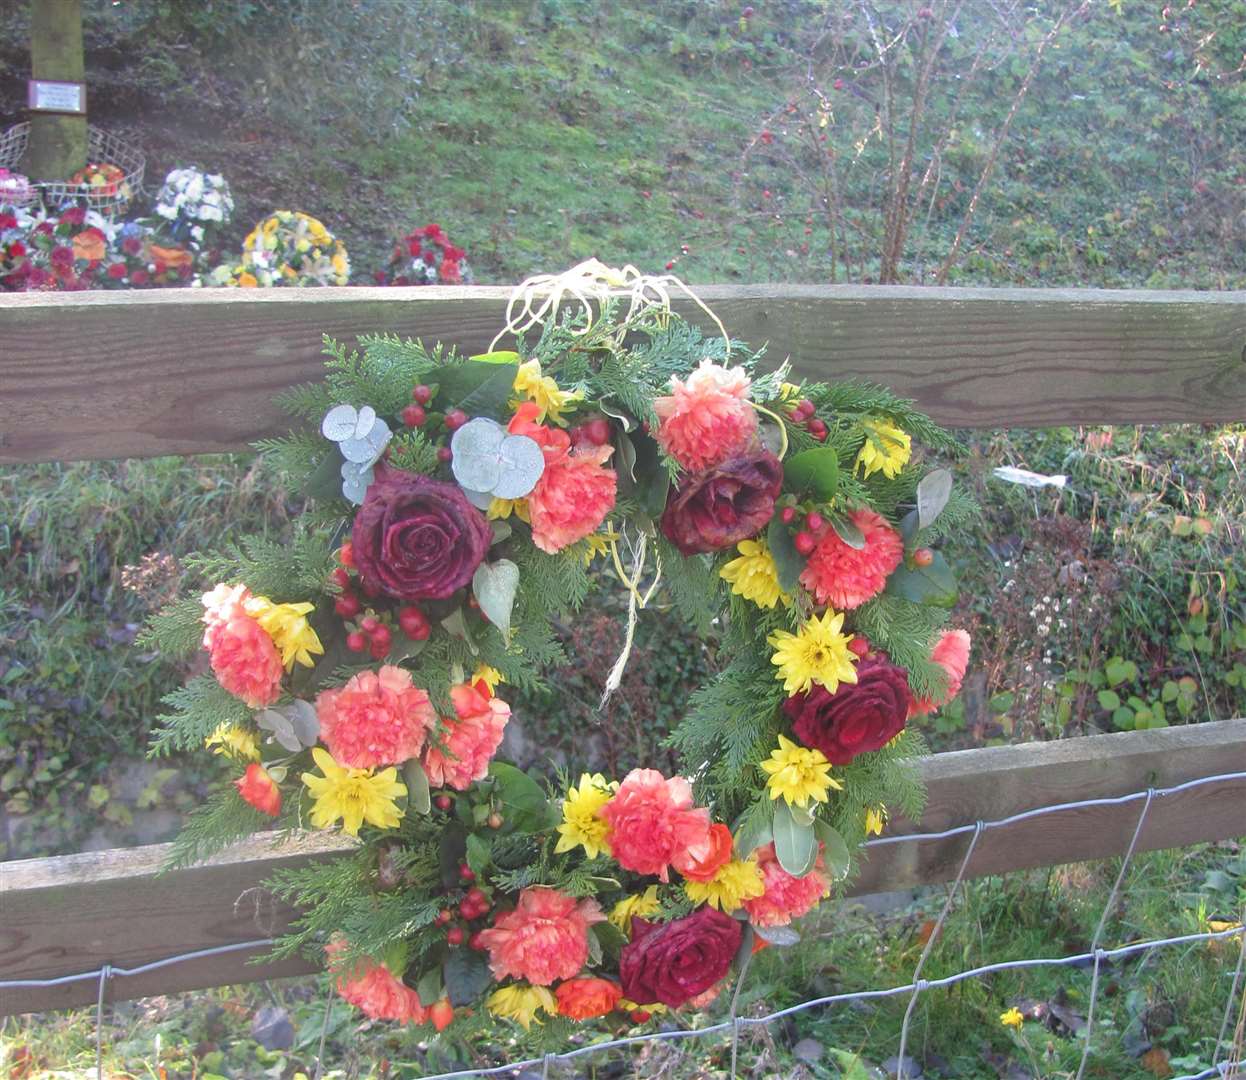 Floral tributes at the scene of the crash near Faversham